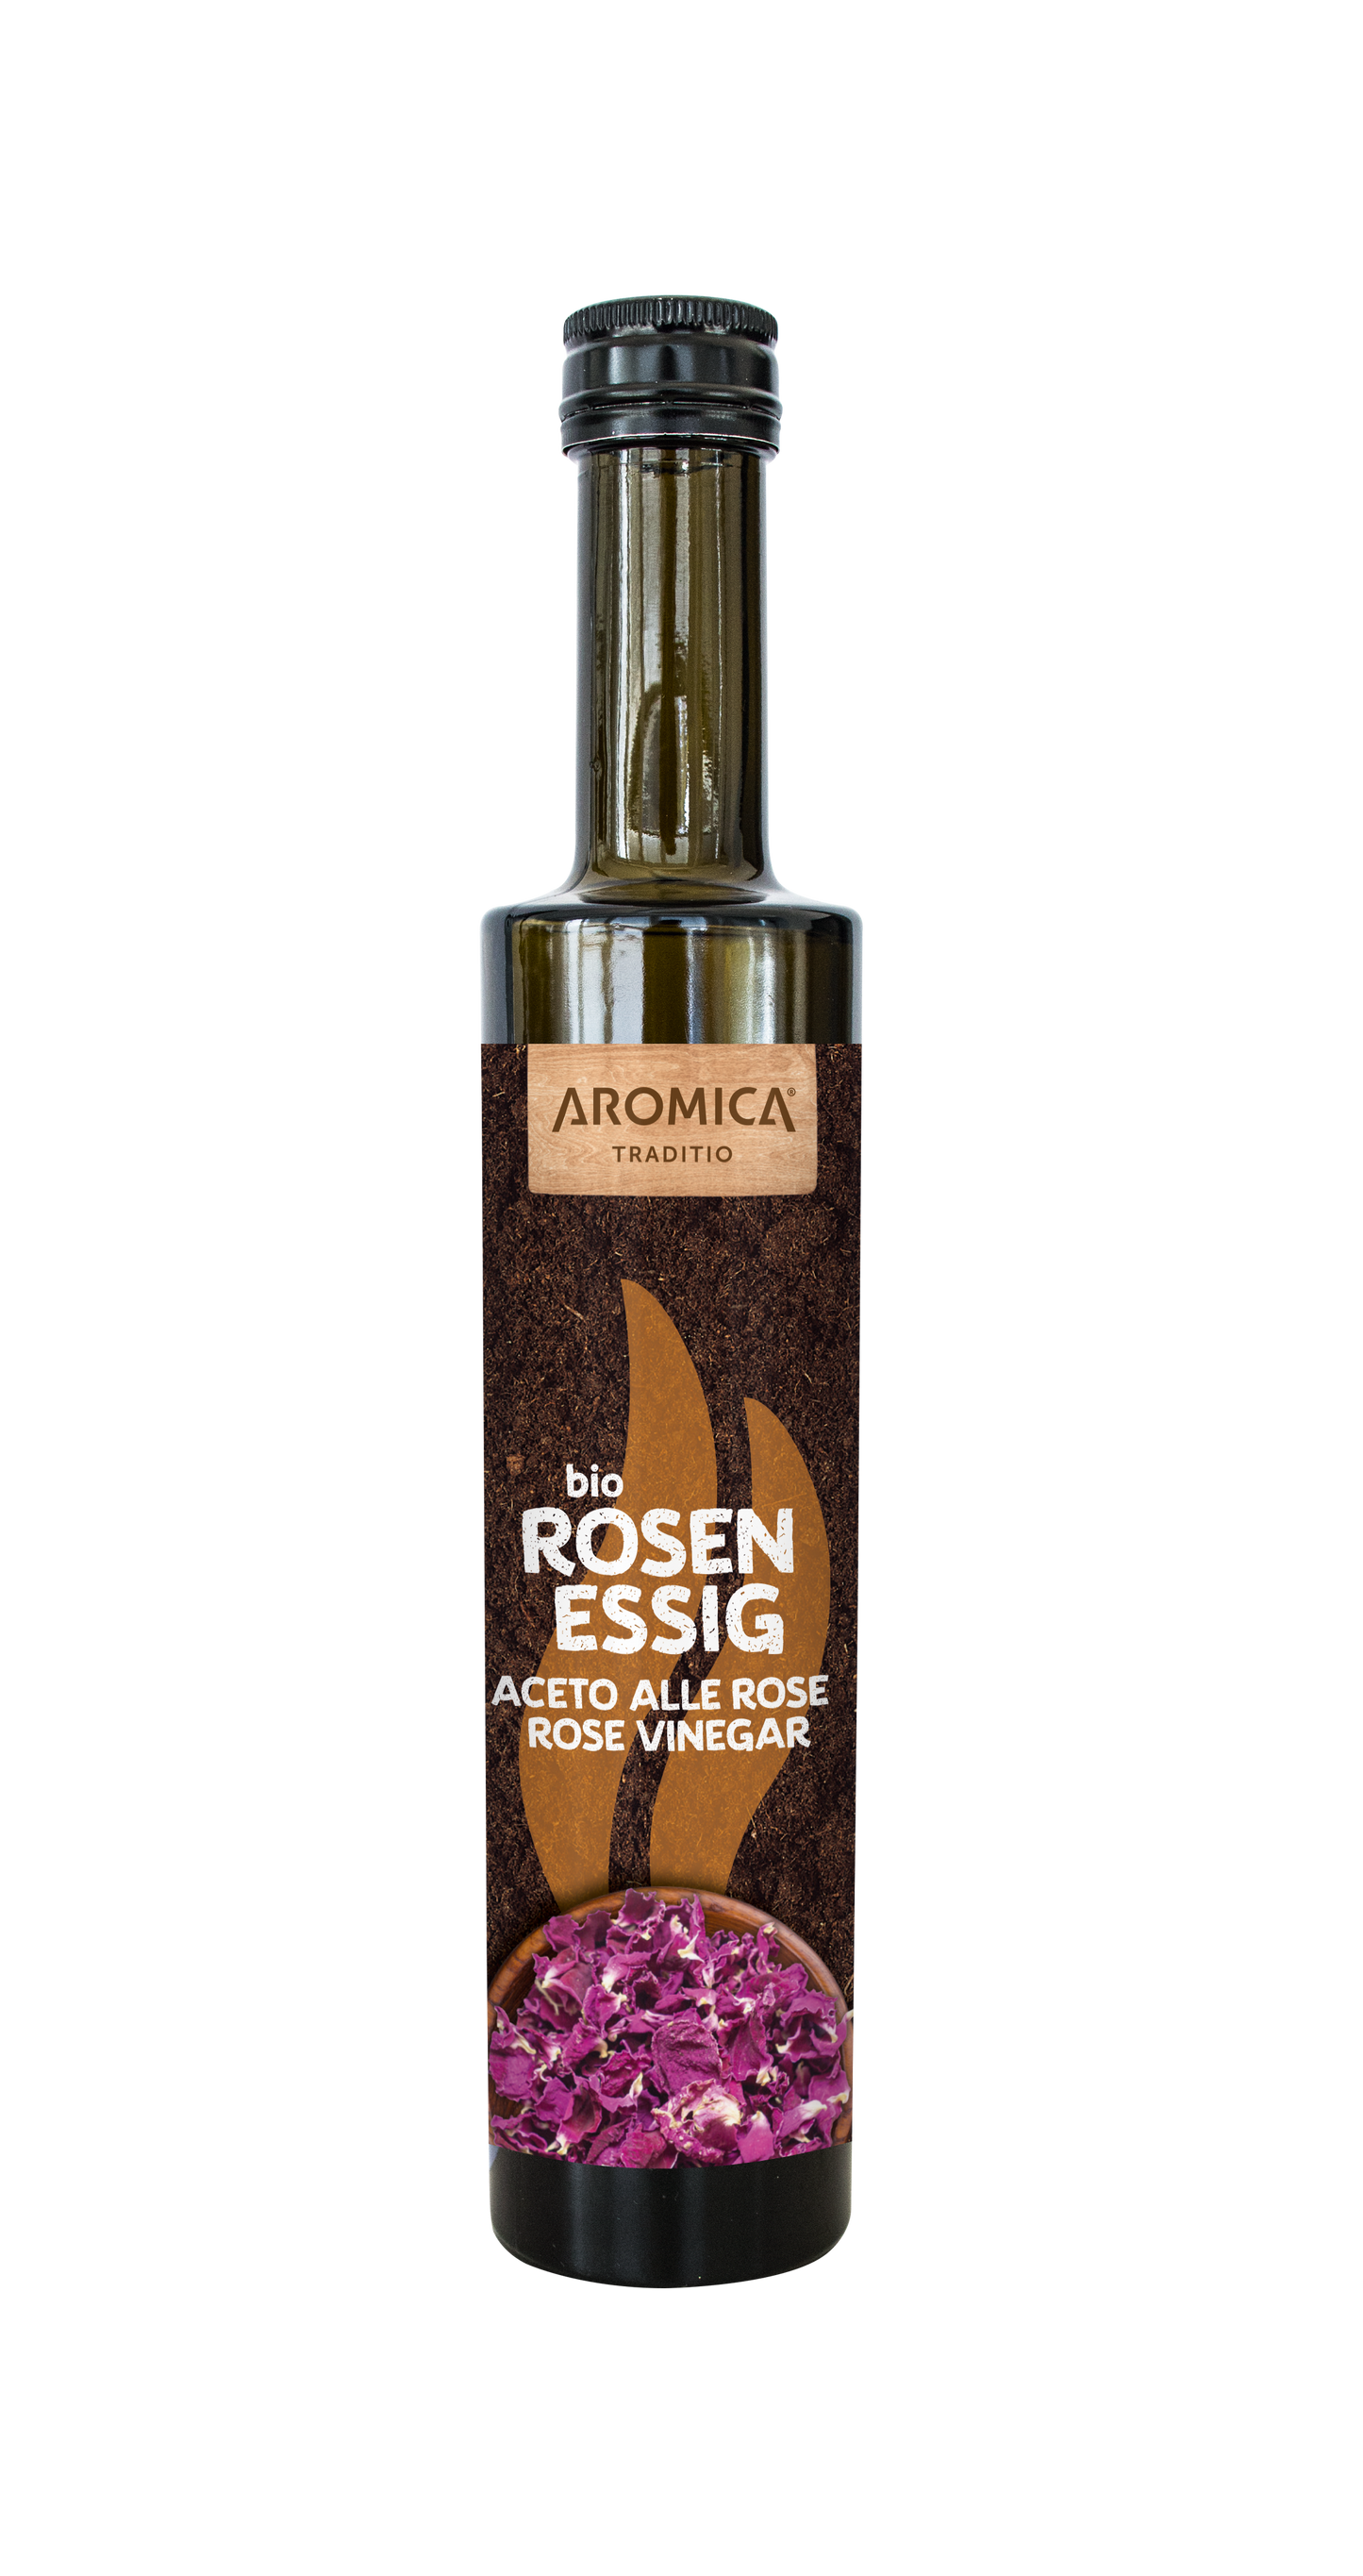 Organic rose vinegar